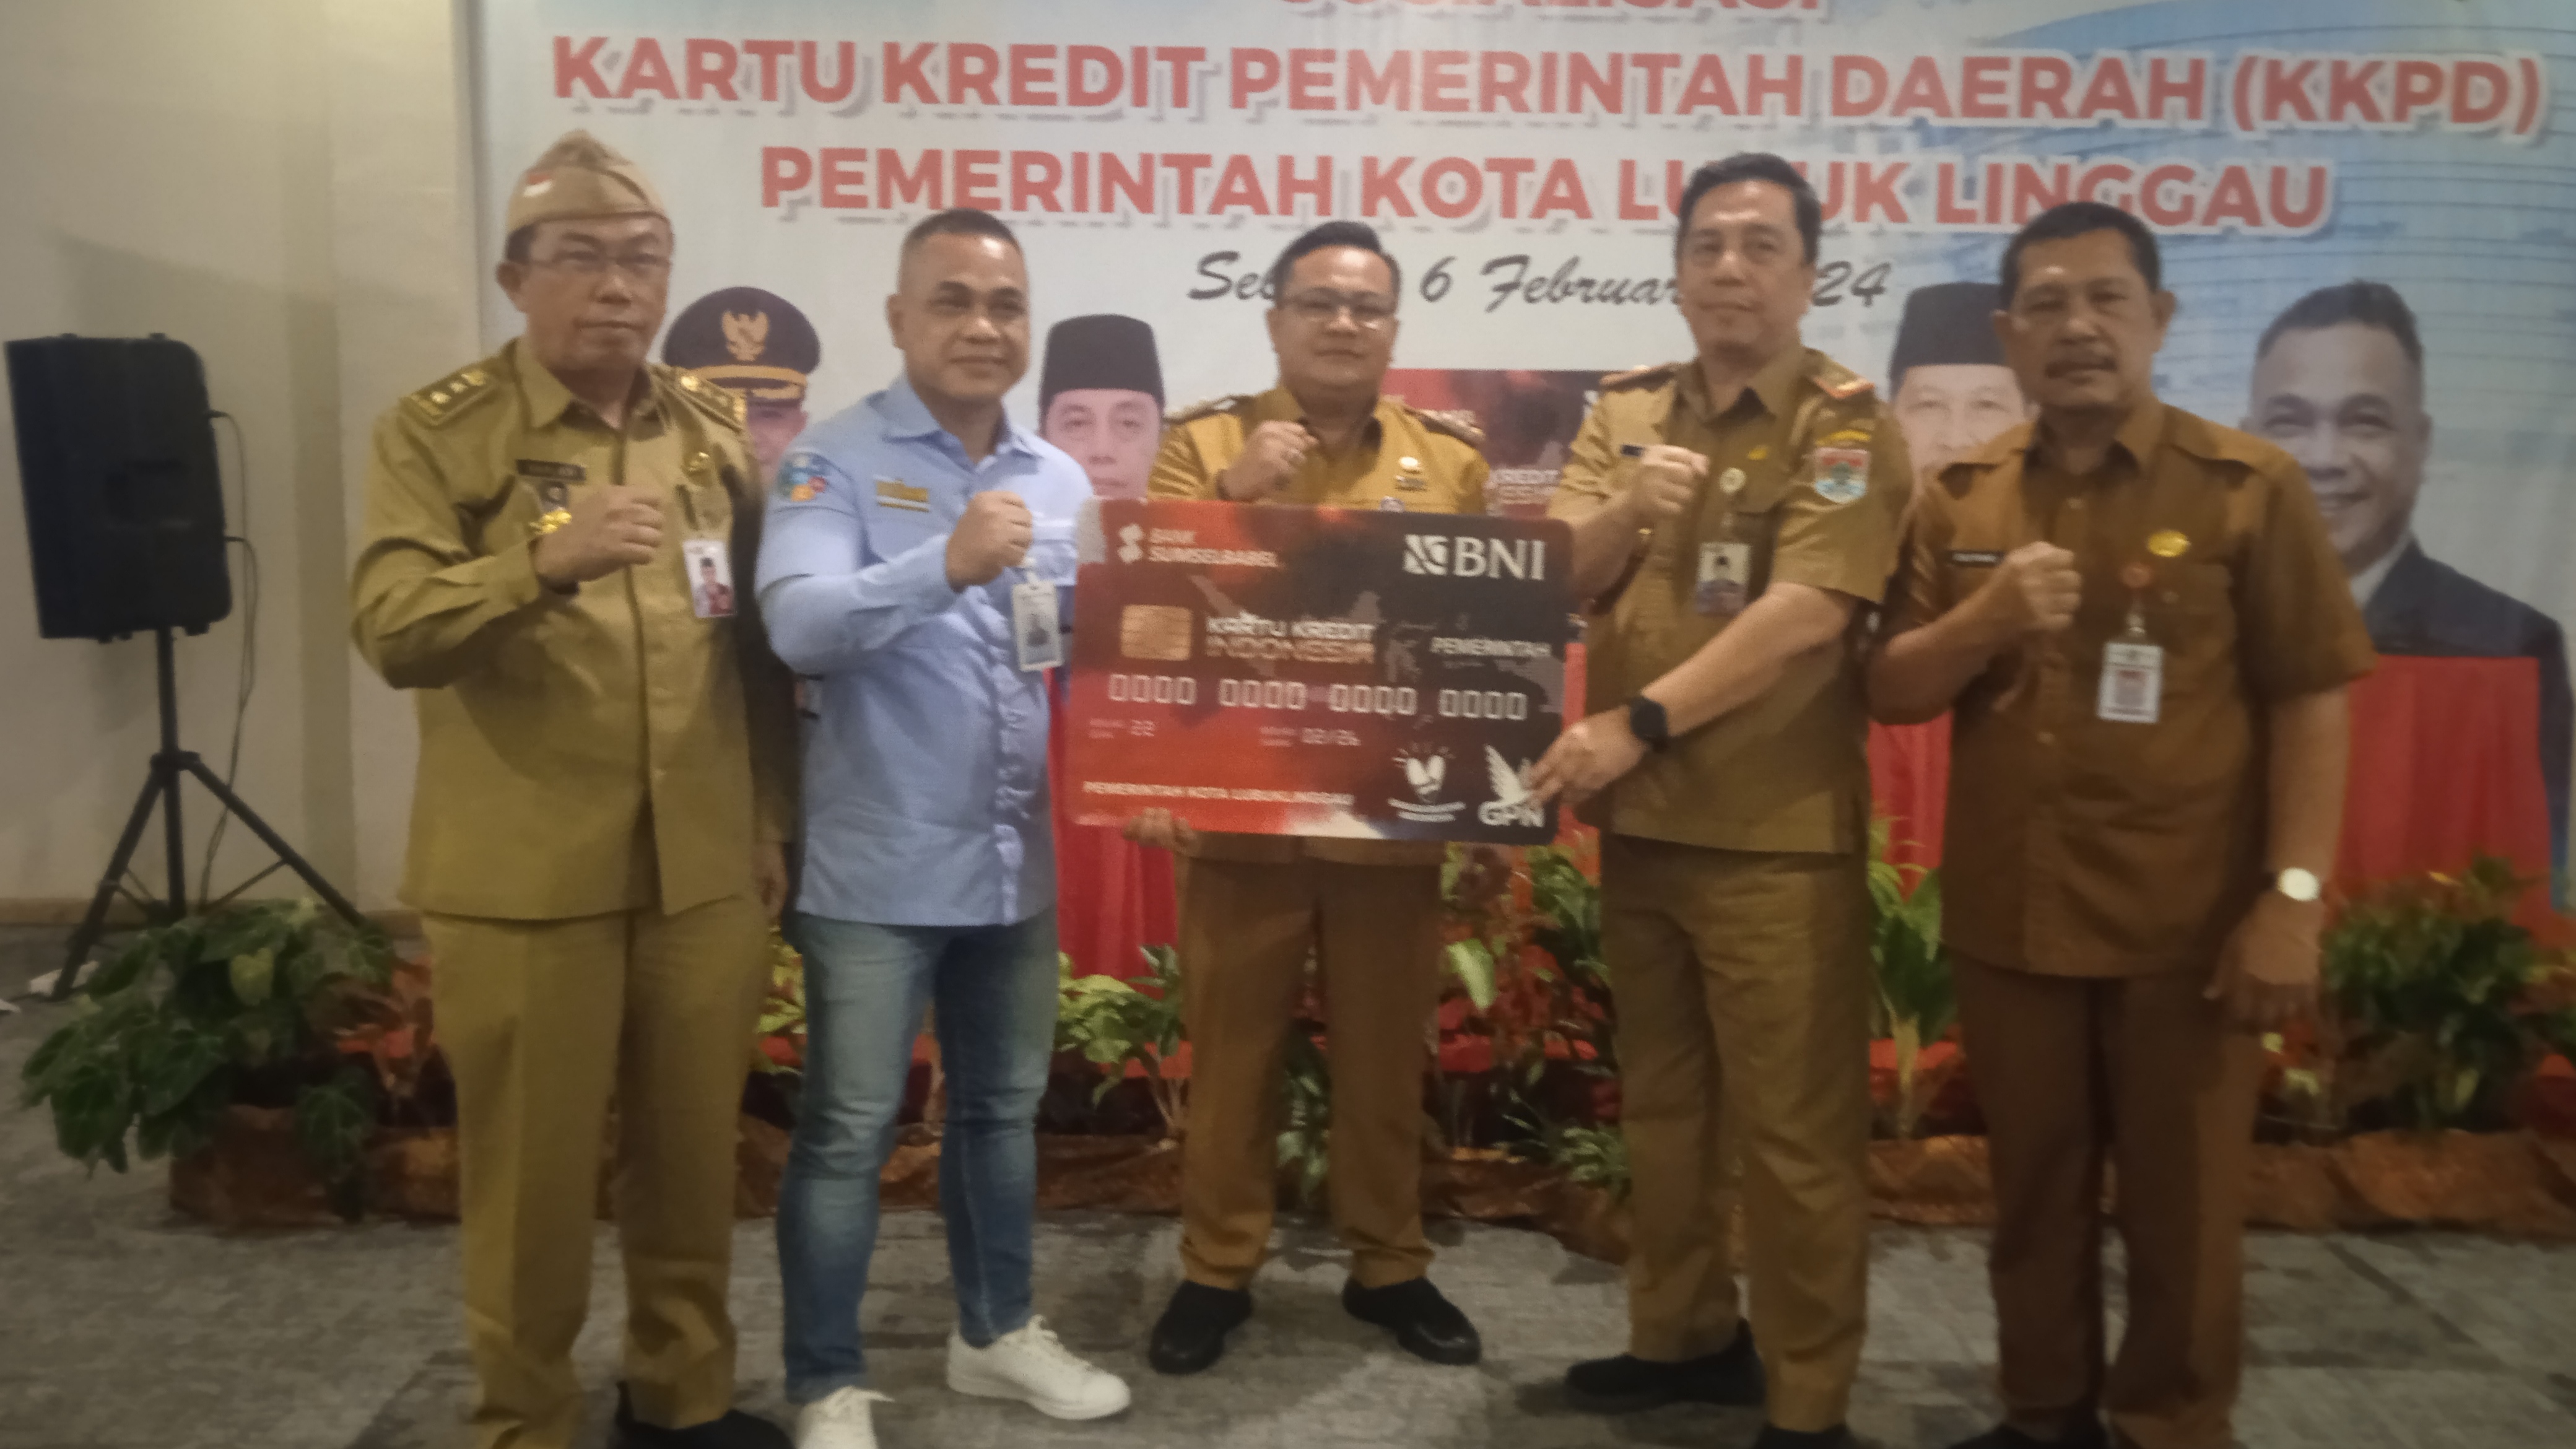 Bank Sumsel Babel Cabang Lubuklinggau Bersama Pemkot Lubuklinggau Sukses Gelar Launching KKPD